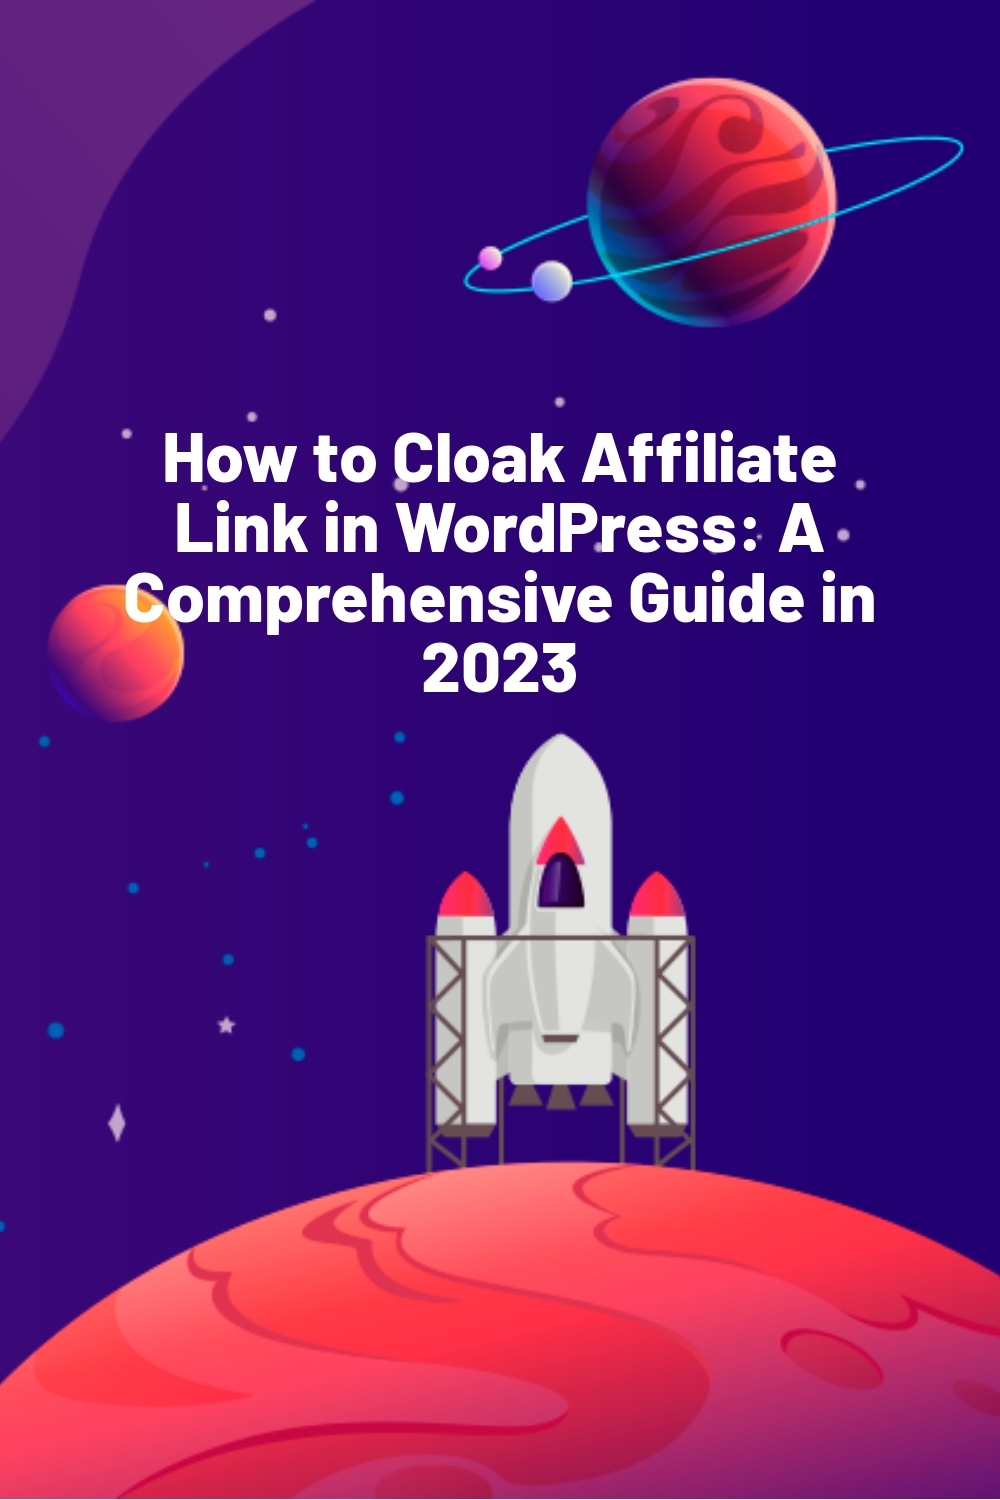 How to Cloak Affiliate Link in WordPress: A Comprehensive Guide in 2023